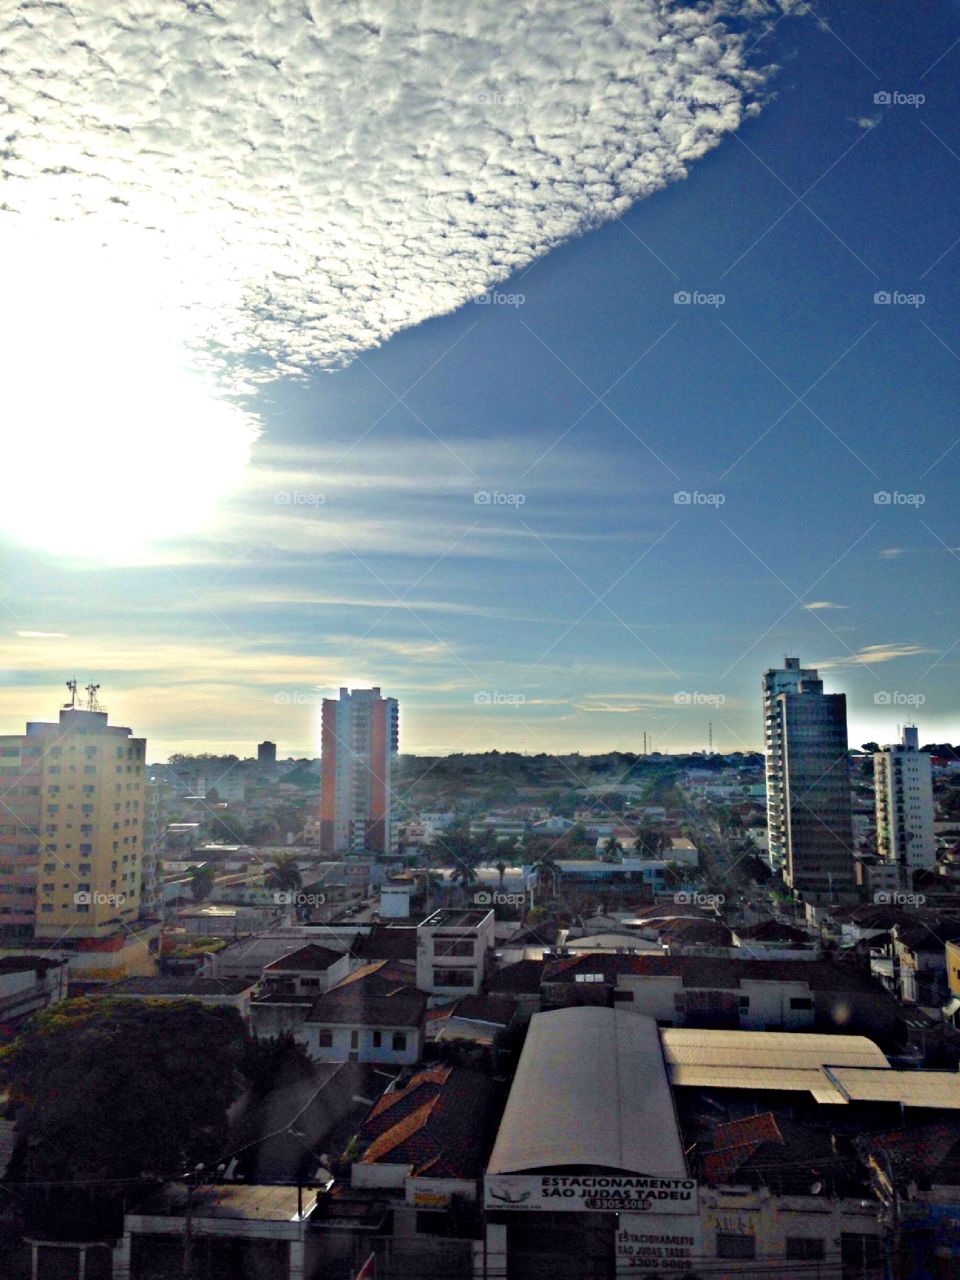 Sp brasil city sky clouds 